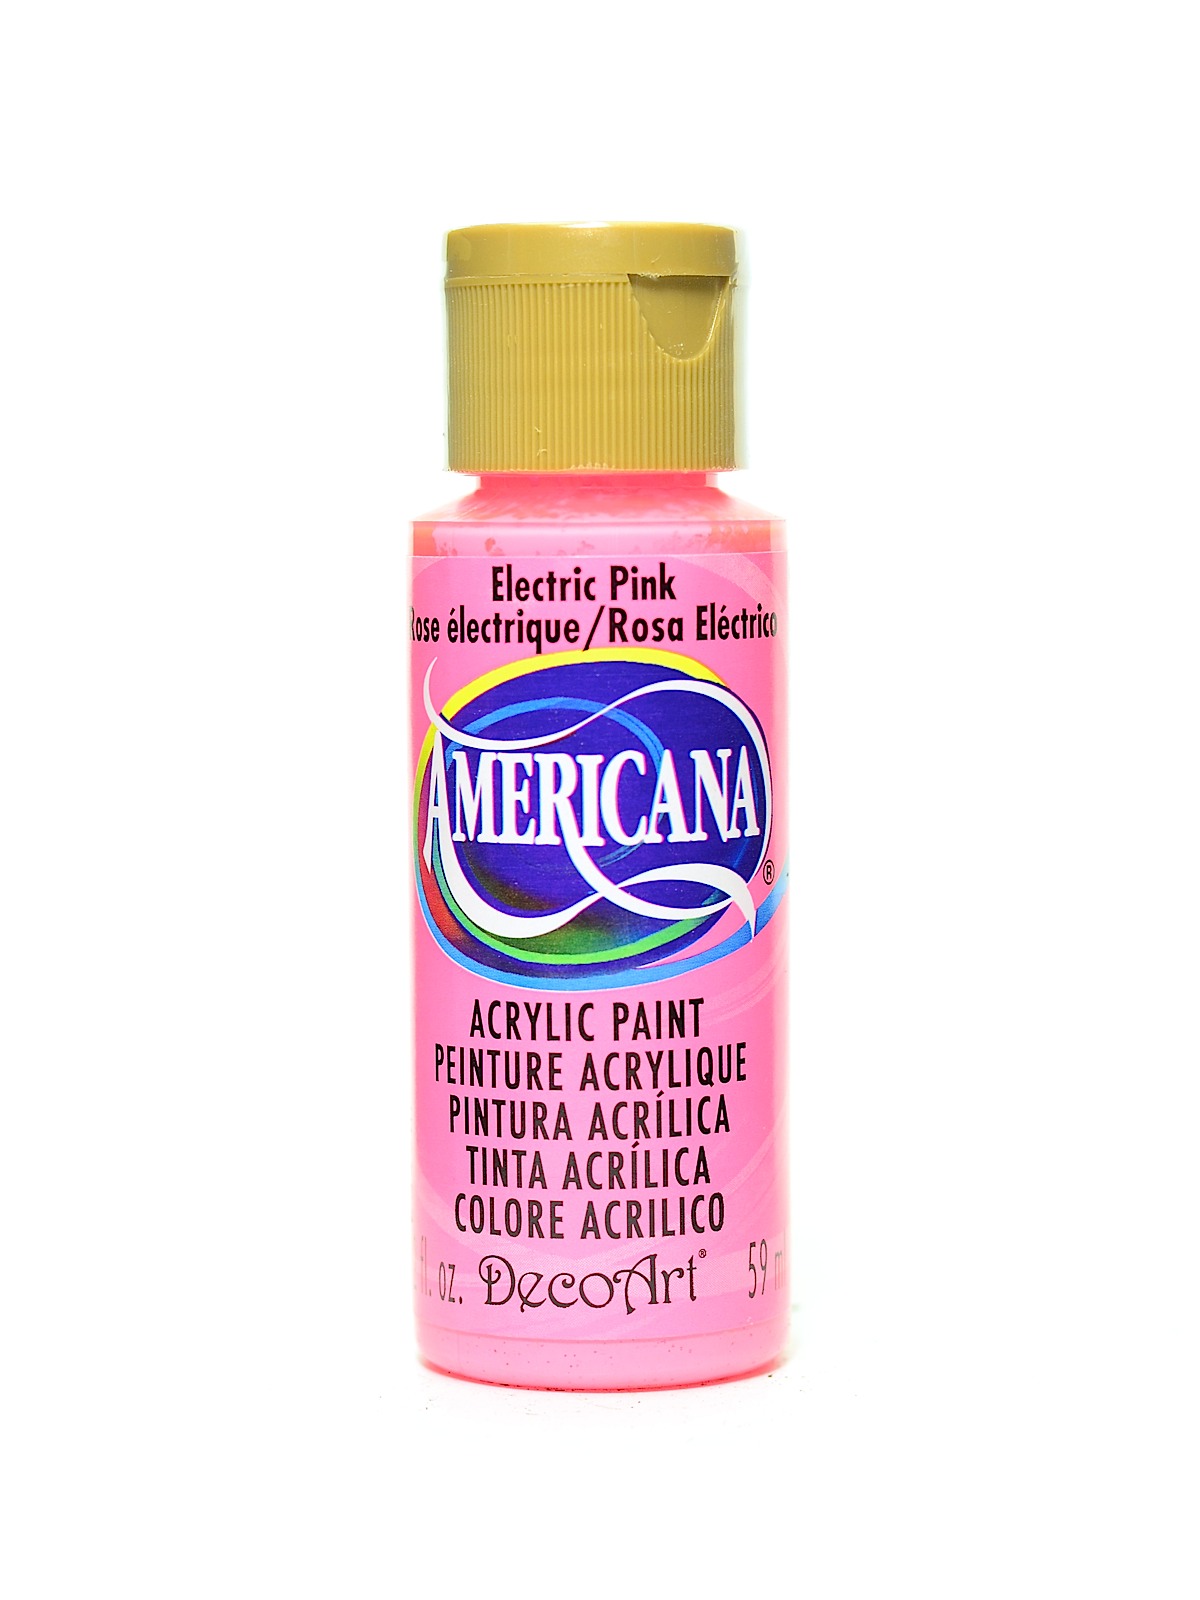 Americana Acrylic Paints Electric Pink 2 Oz.